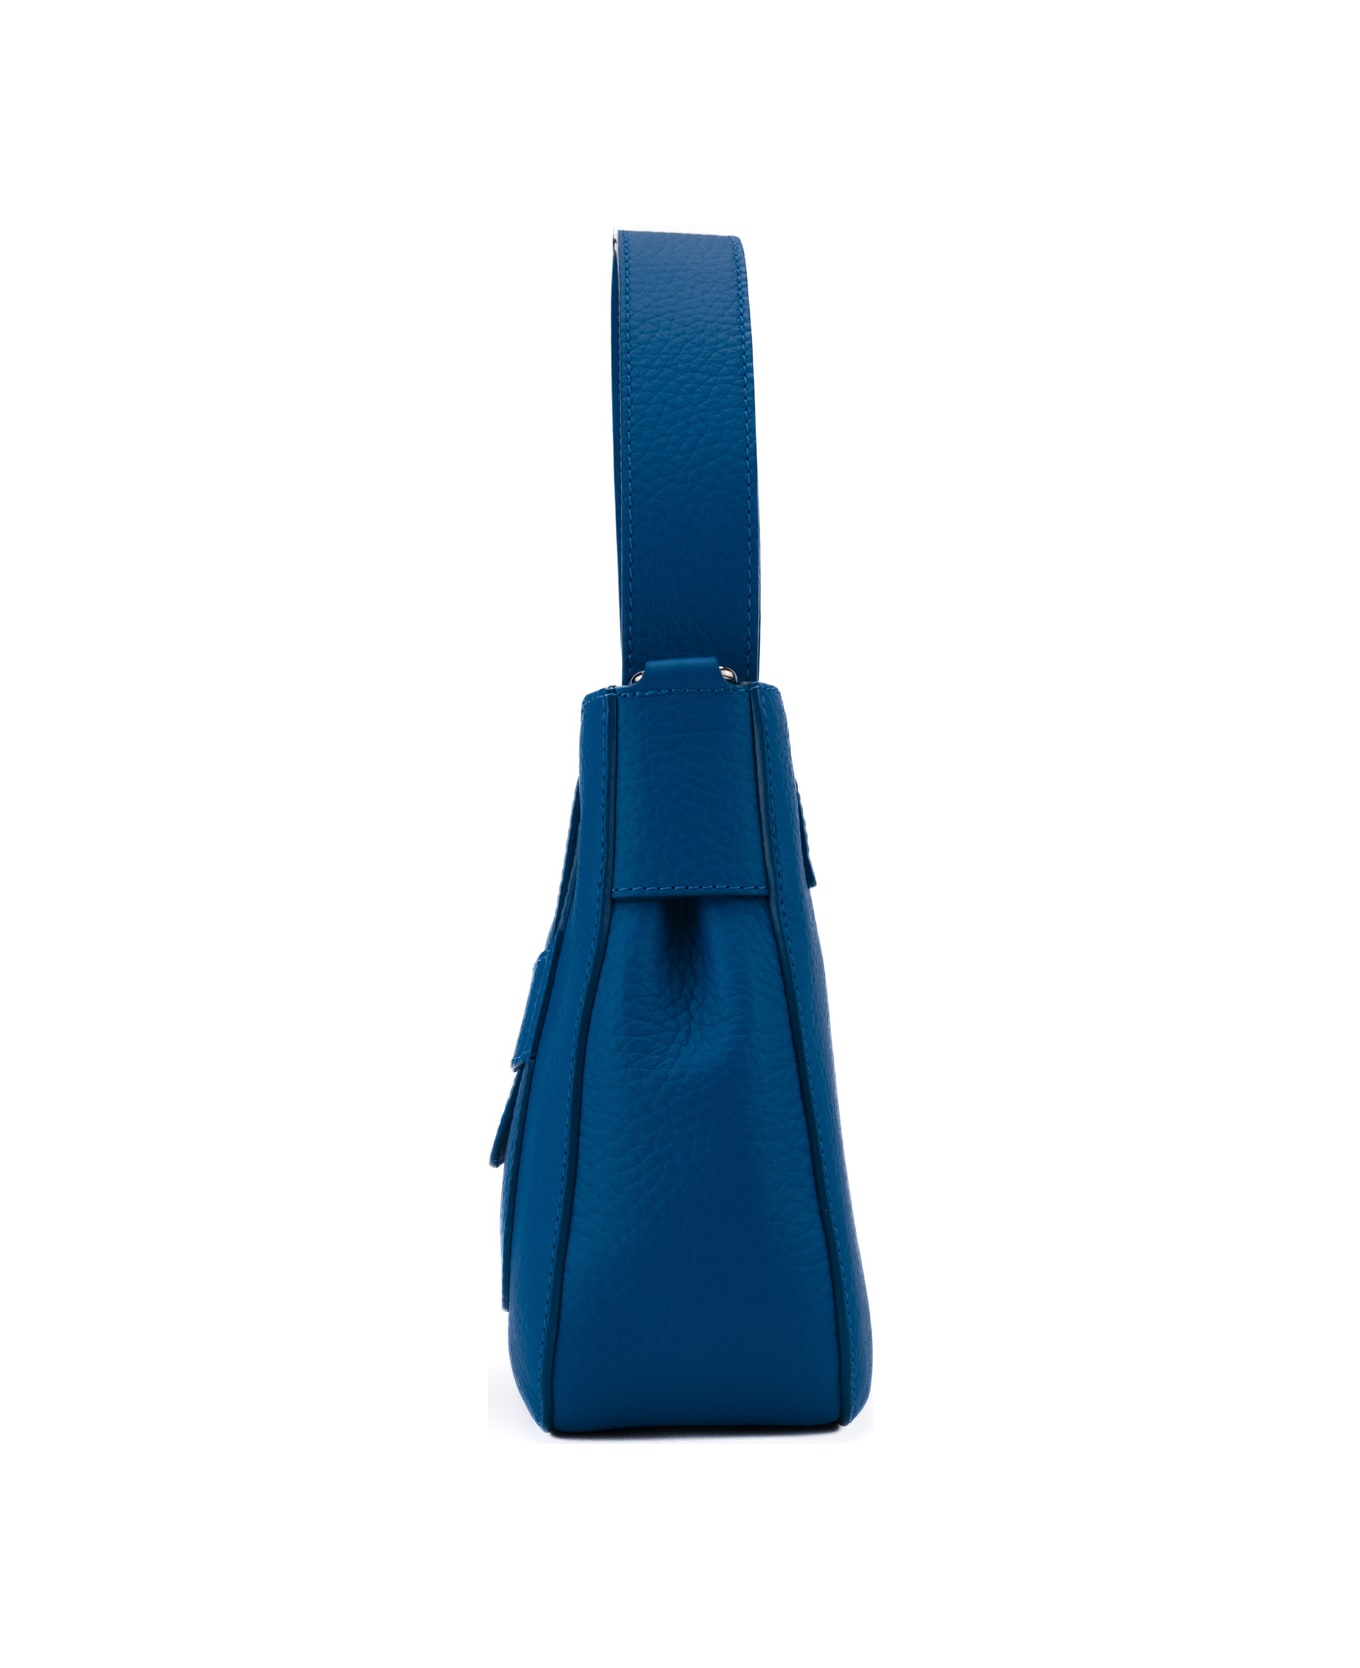 Orciani Dama Soft Midi Bag In Leather - Blu elettrico